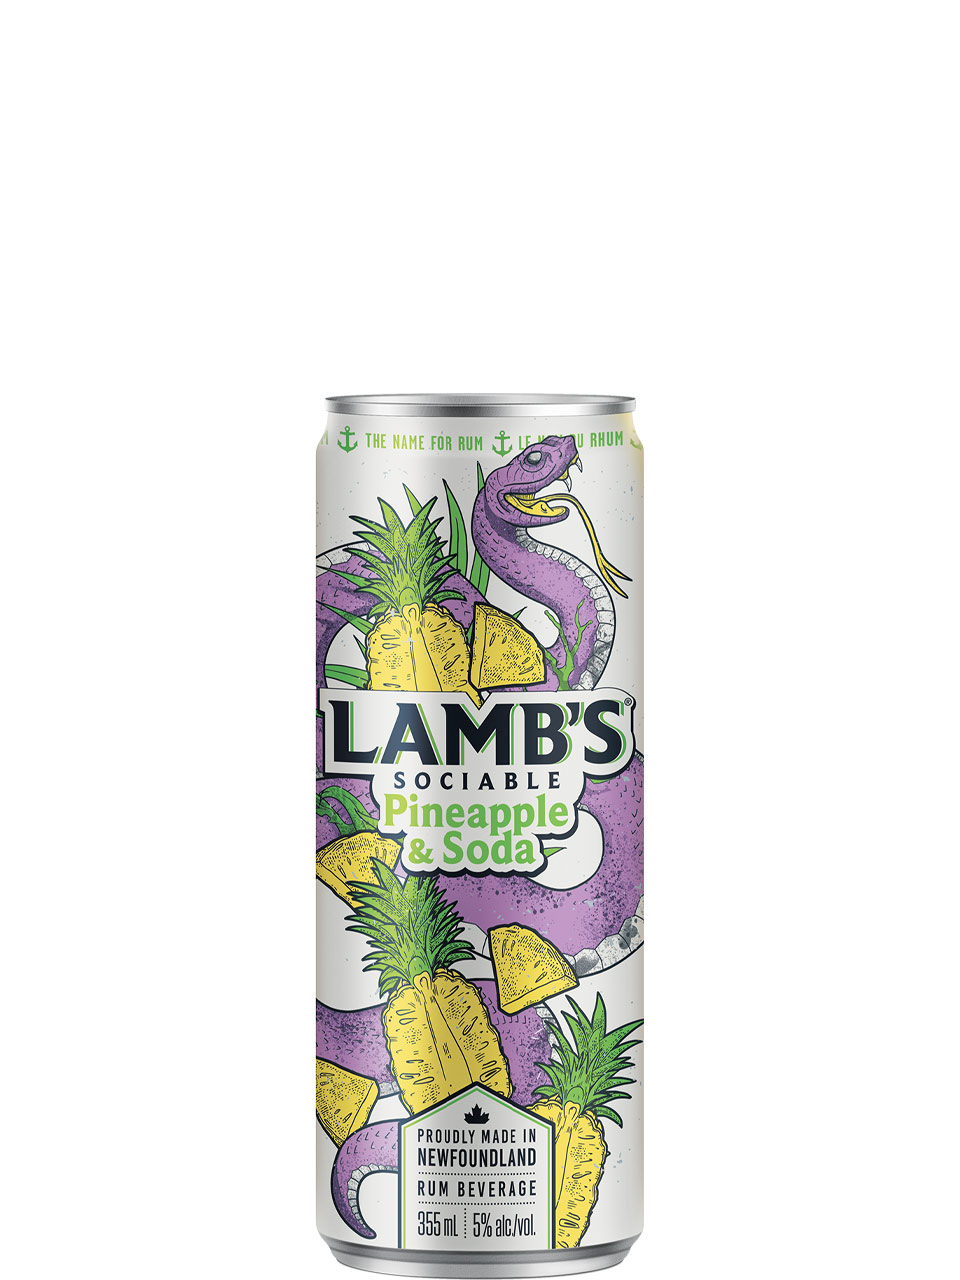 Lamb's Sociable Pineapple & Soda 6 Pack Cans